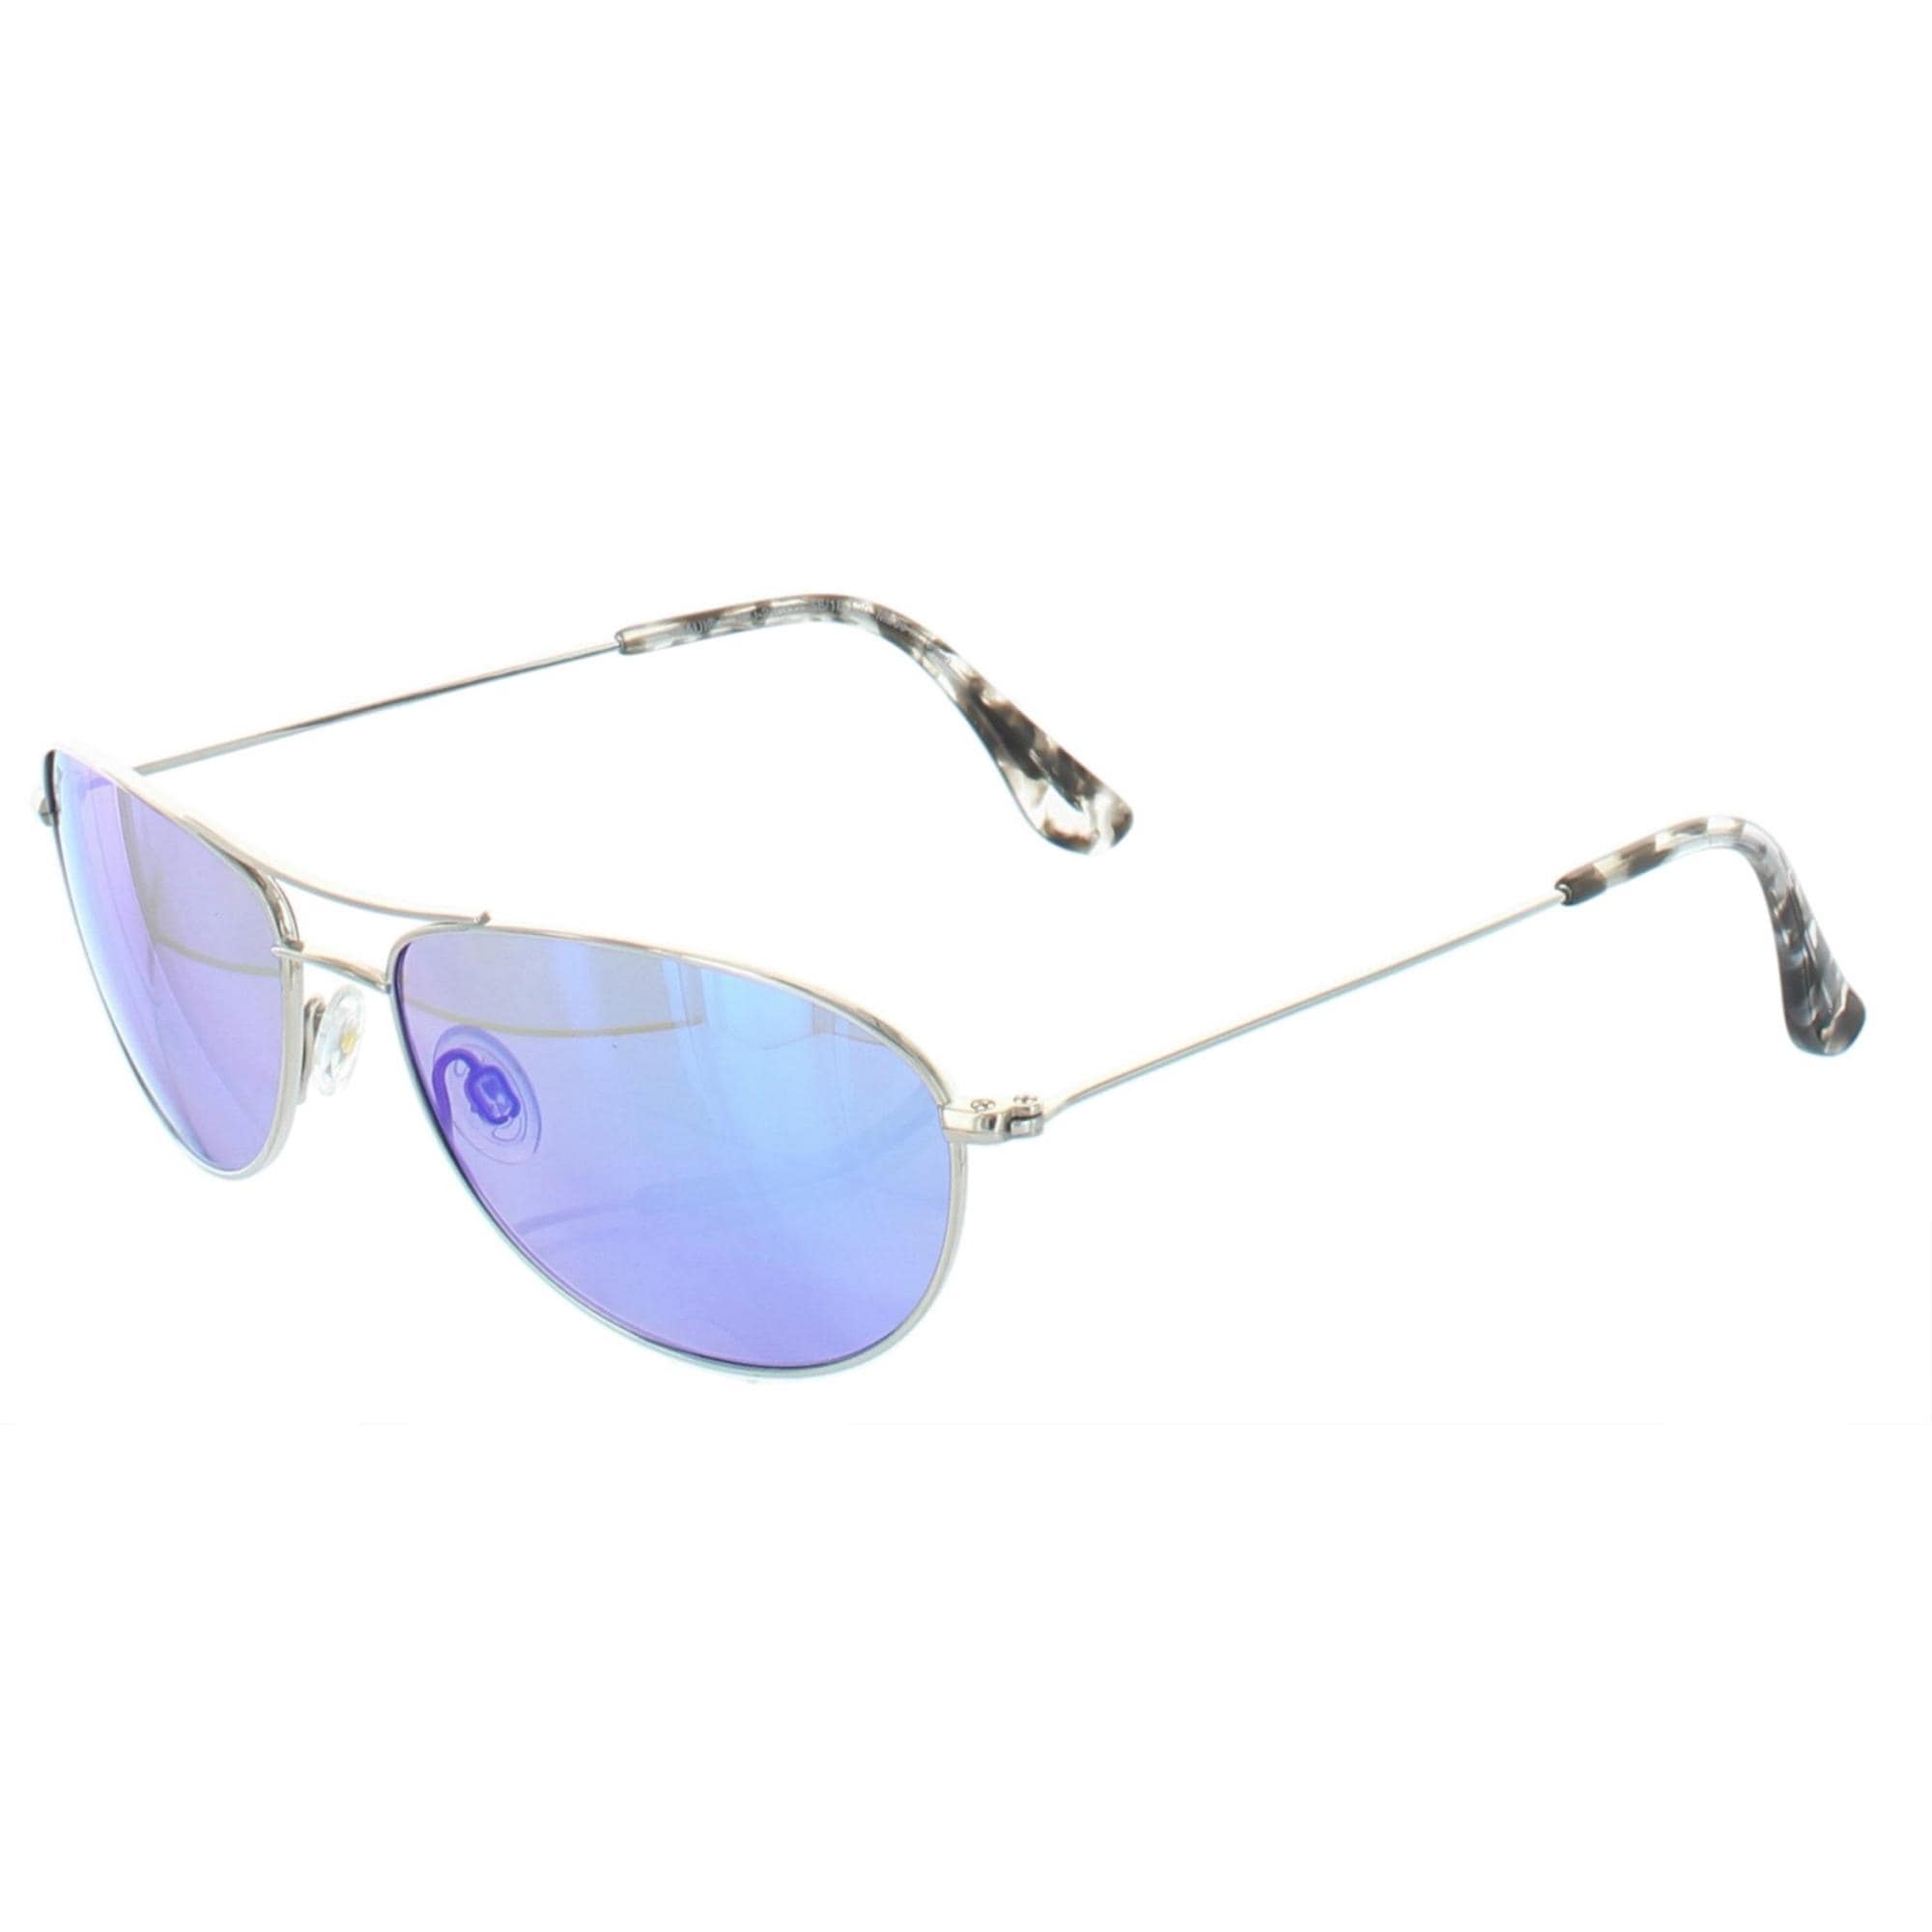 Maui Jim Womens Baby Beach Aviator Sunglasses UV Protection Signature - Silver/Maui Pure Blue Hawaii - O/S